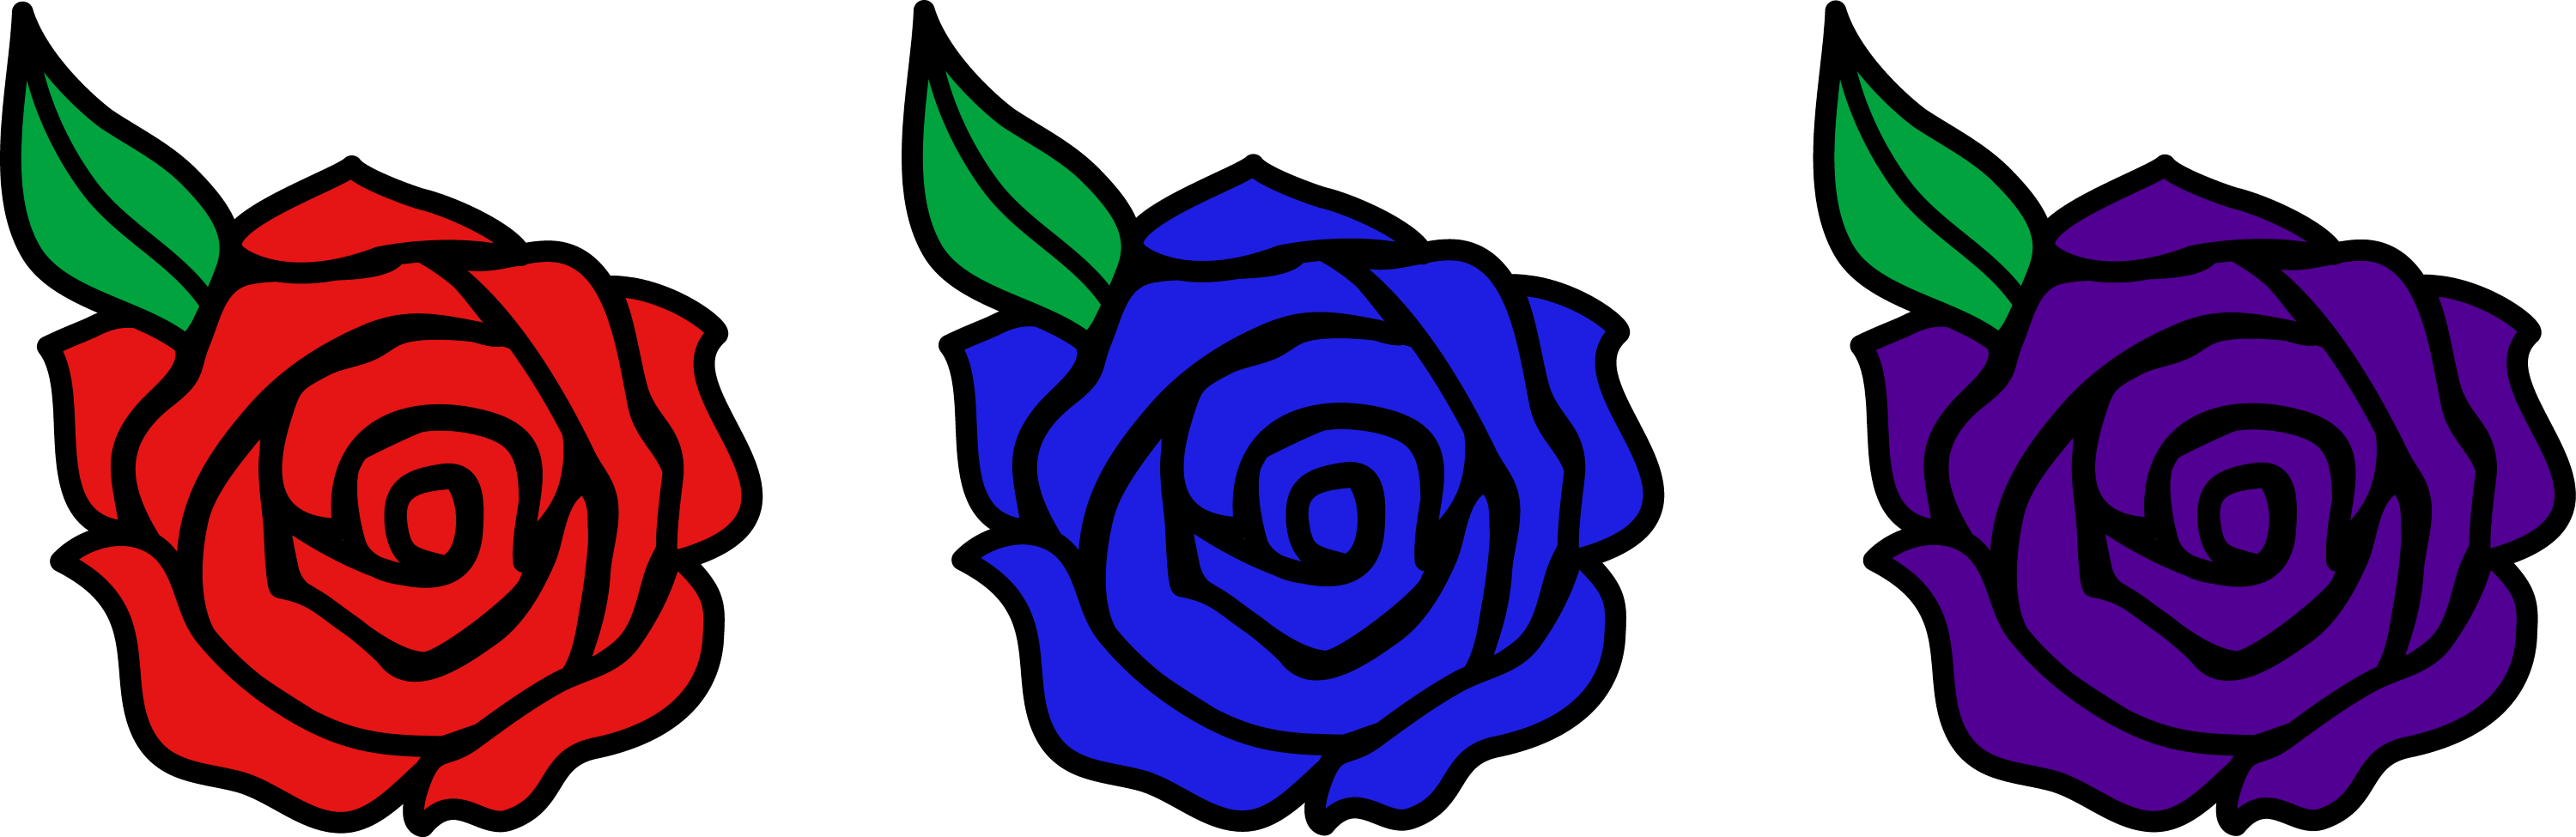 Cartoon Rose Flower